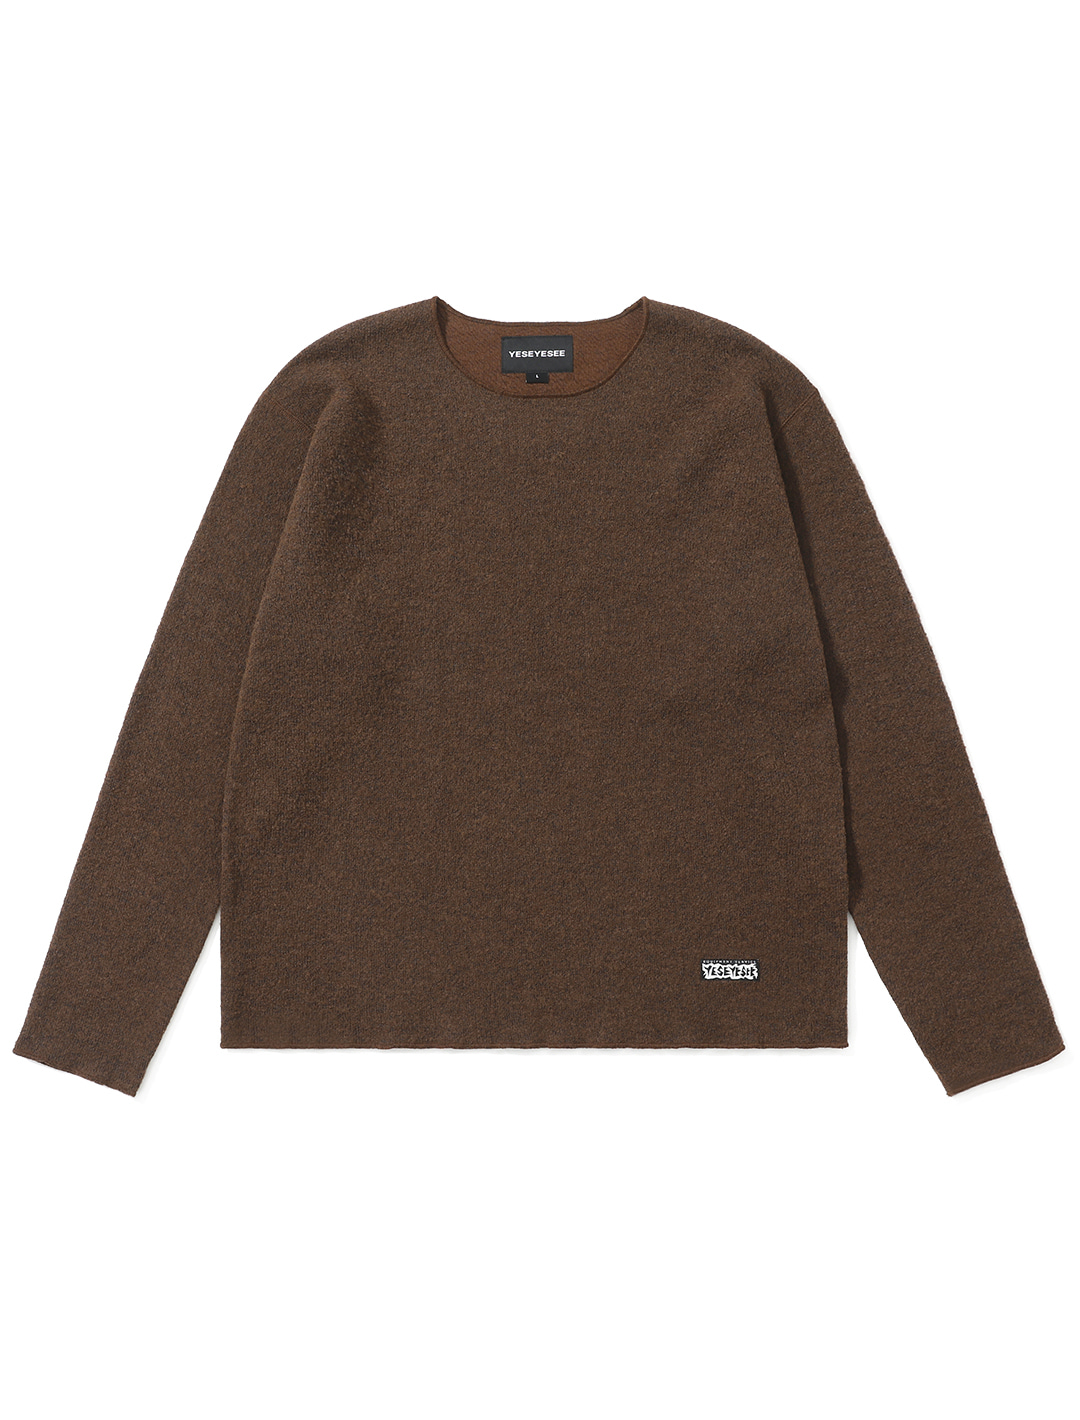 Wool Jersey L/S Brown